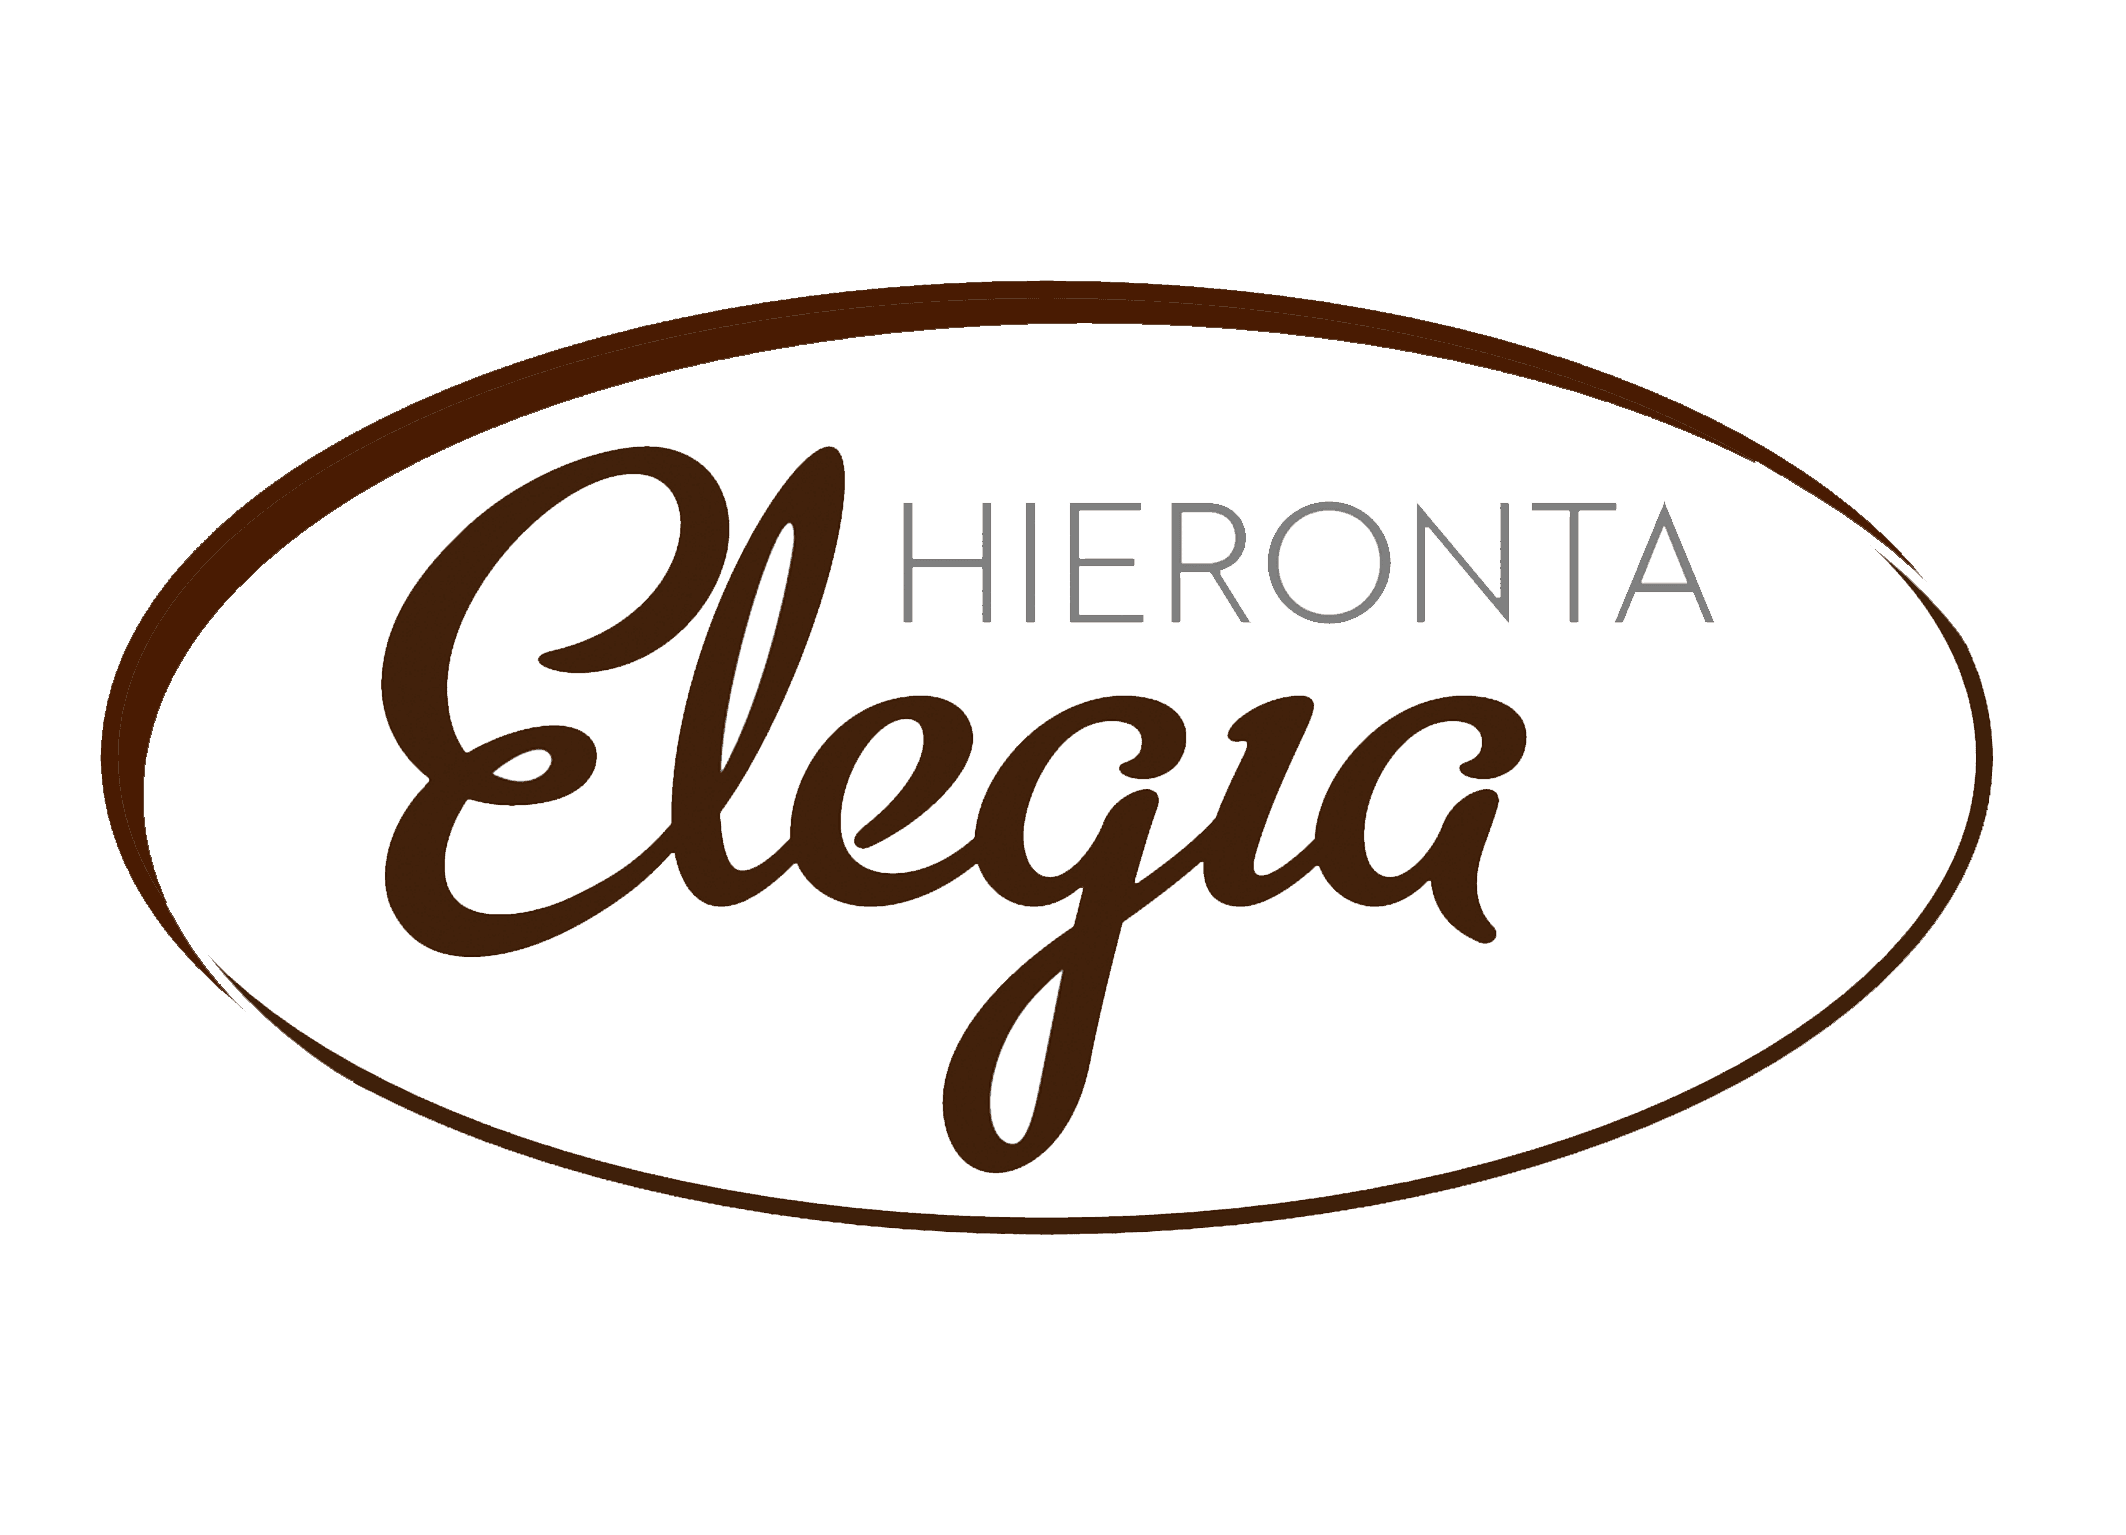 Hieronta Elegia Logo